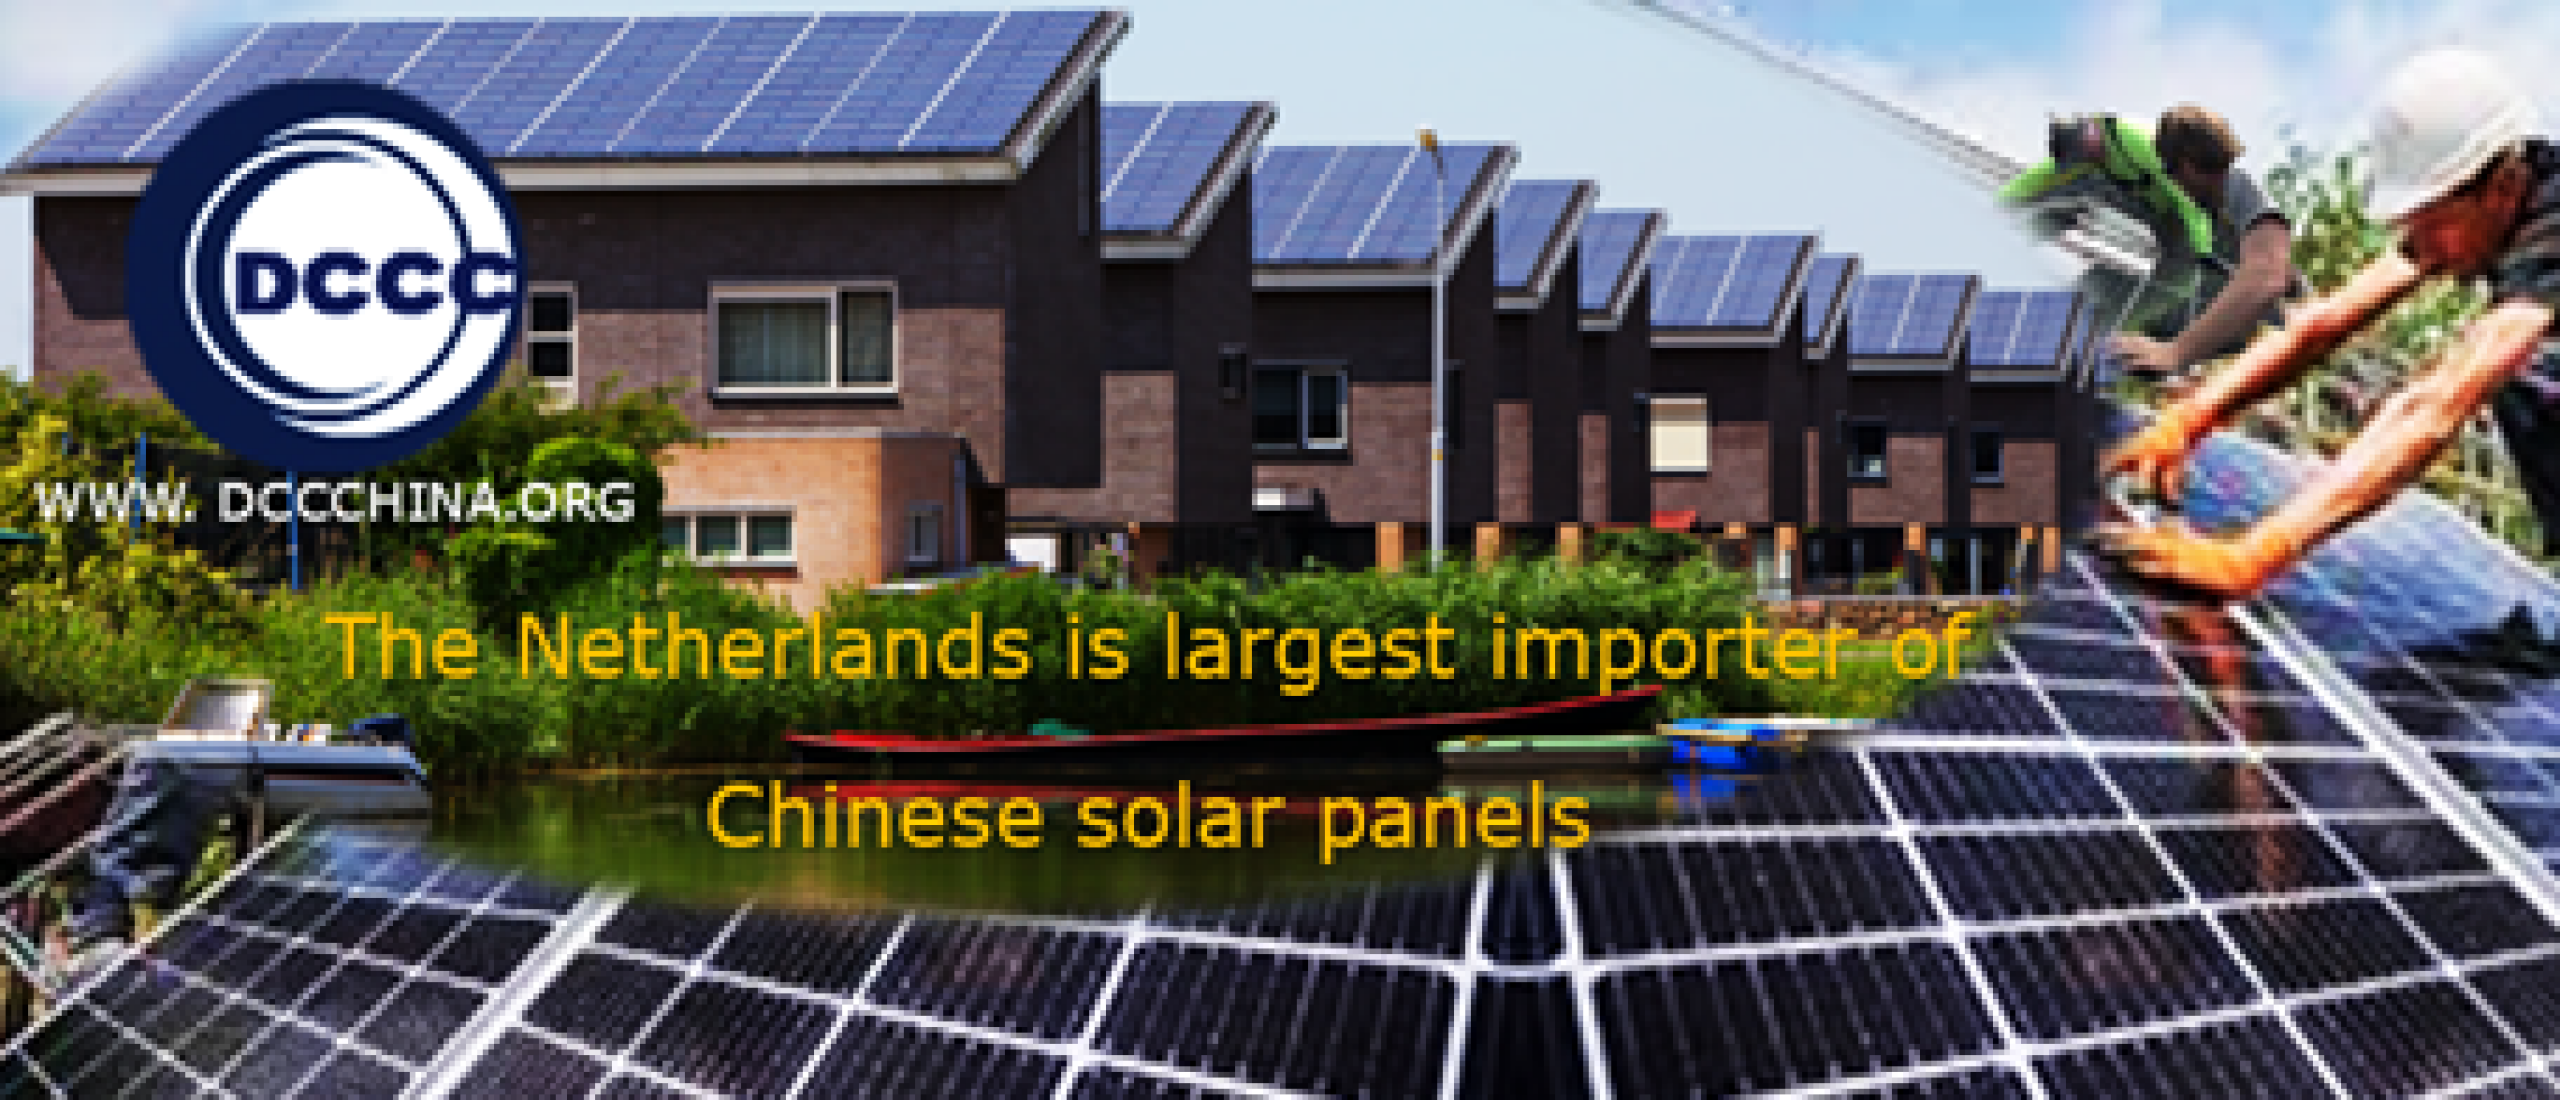 The Netherlands is largest importer of Chinese solar panels [荷兰是中国太阳能电池板最大进口商]